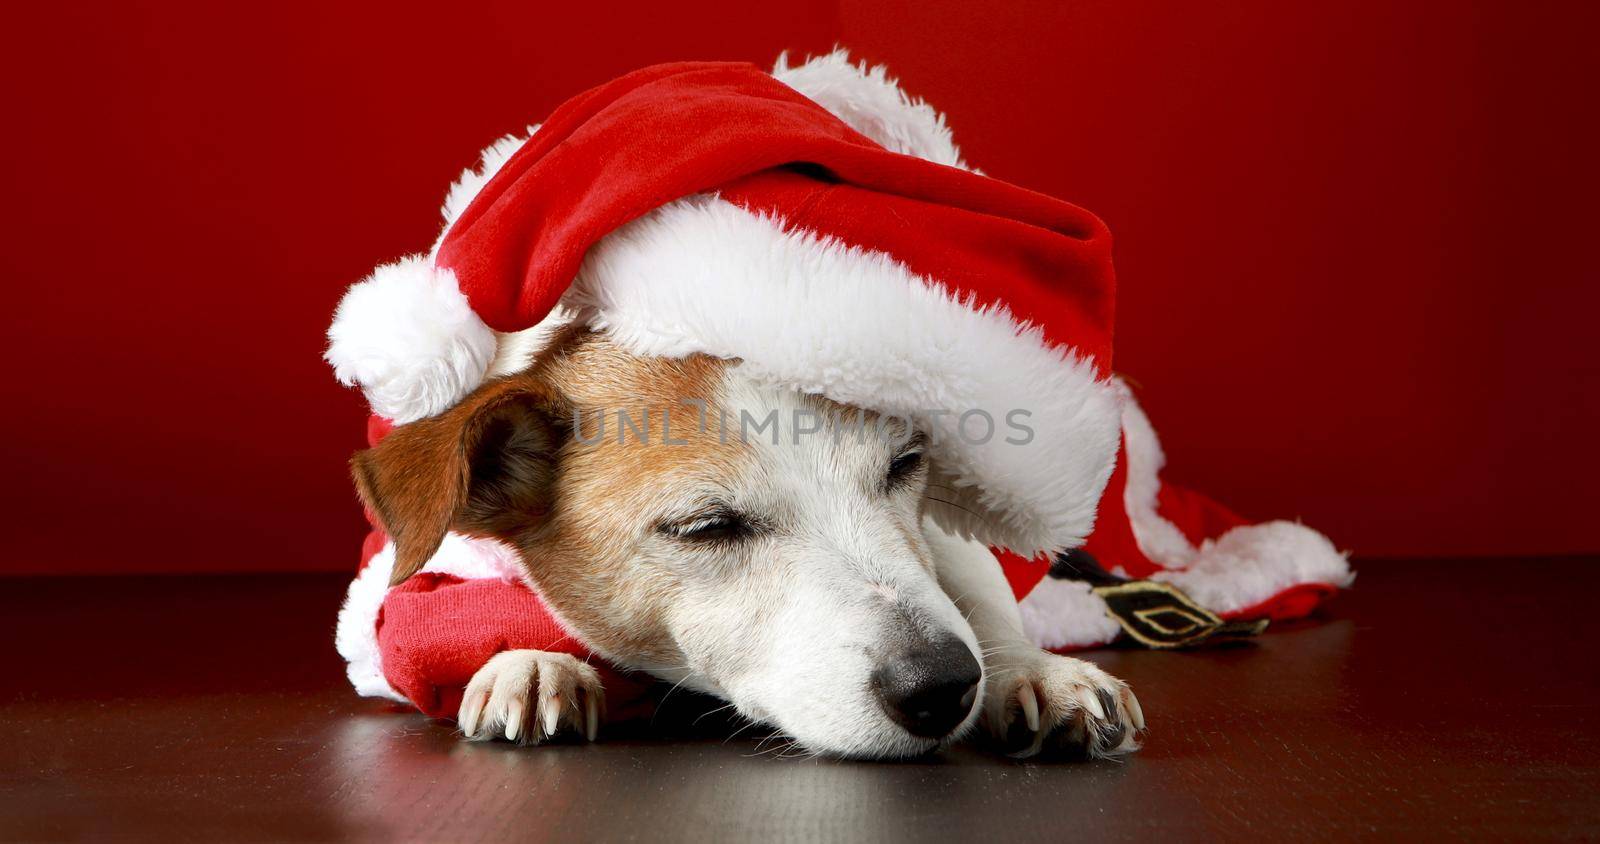 Adorable Jack Russell Terrier dog in Santa costume sleeping on floor on red background in studio